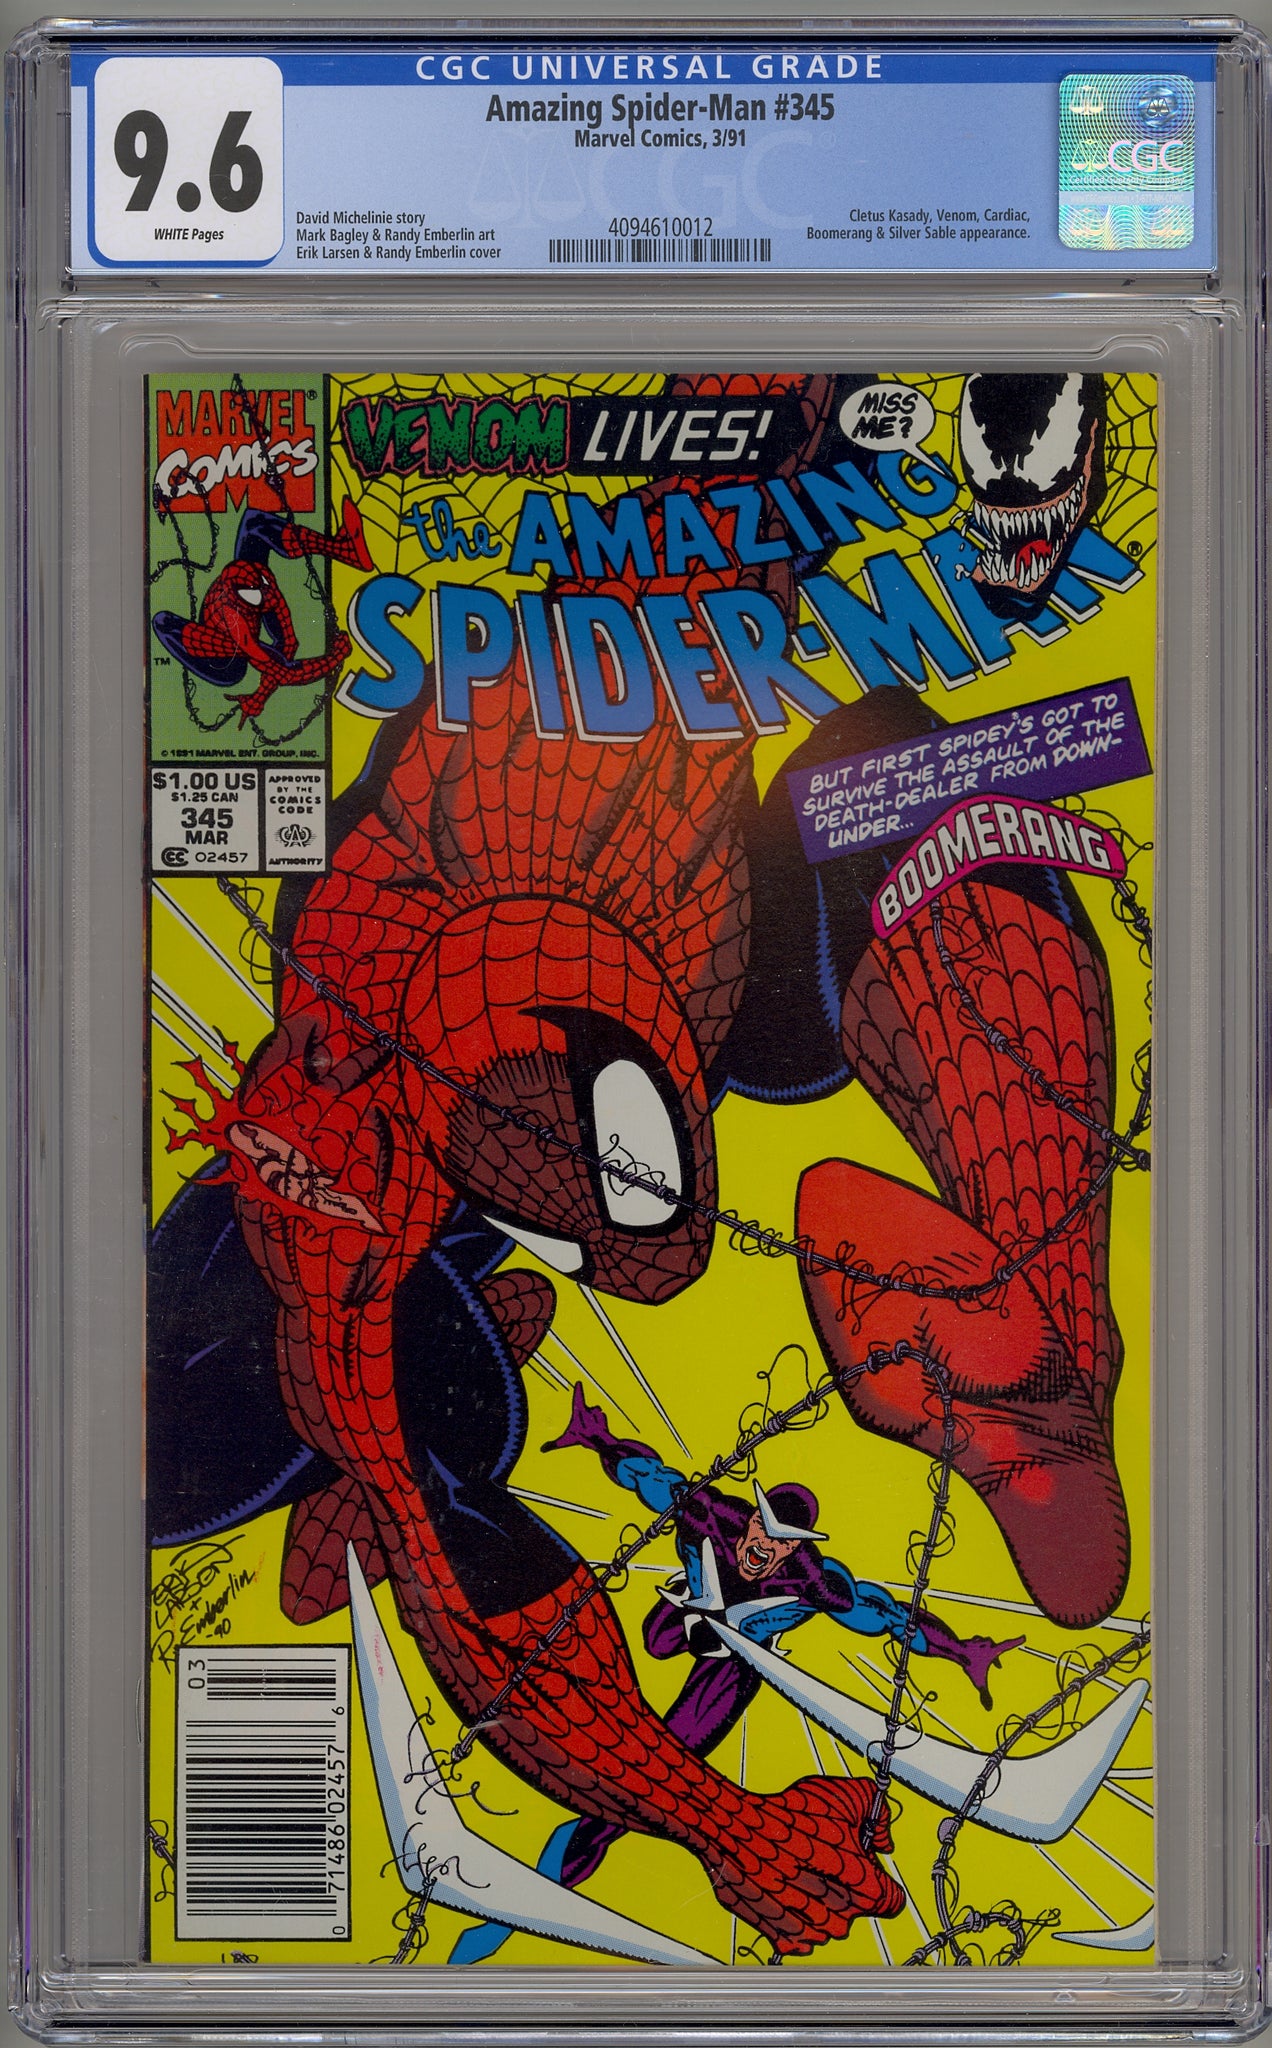 Amazing Spider-Man #345 (1991) newsstand edition - Cletus Kasady, Venom, Cardiac, Boomerang, Silver Sable